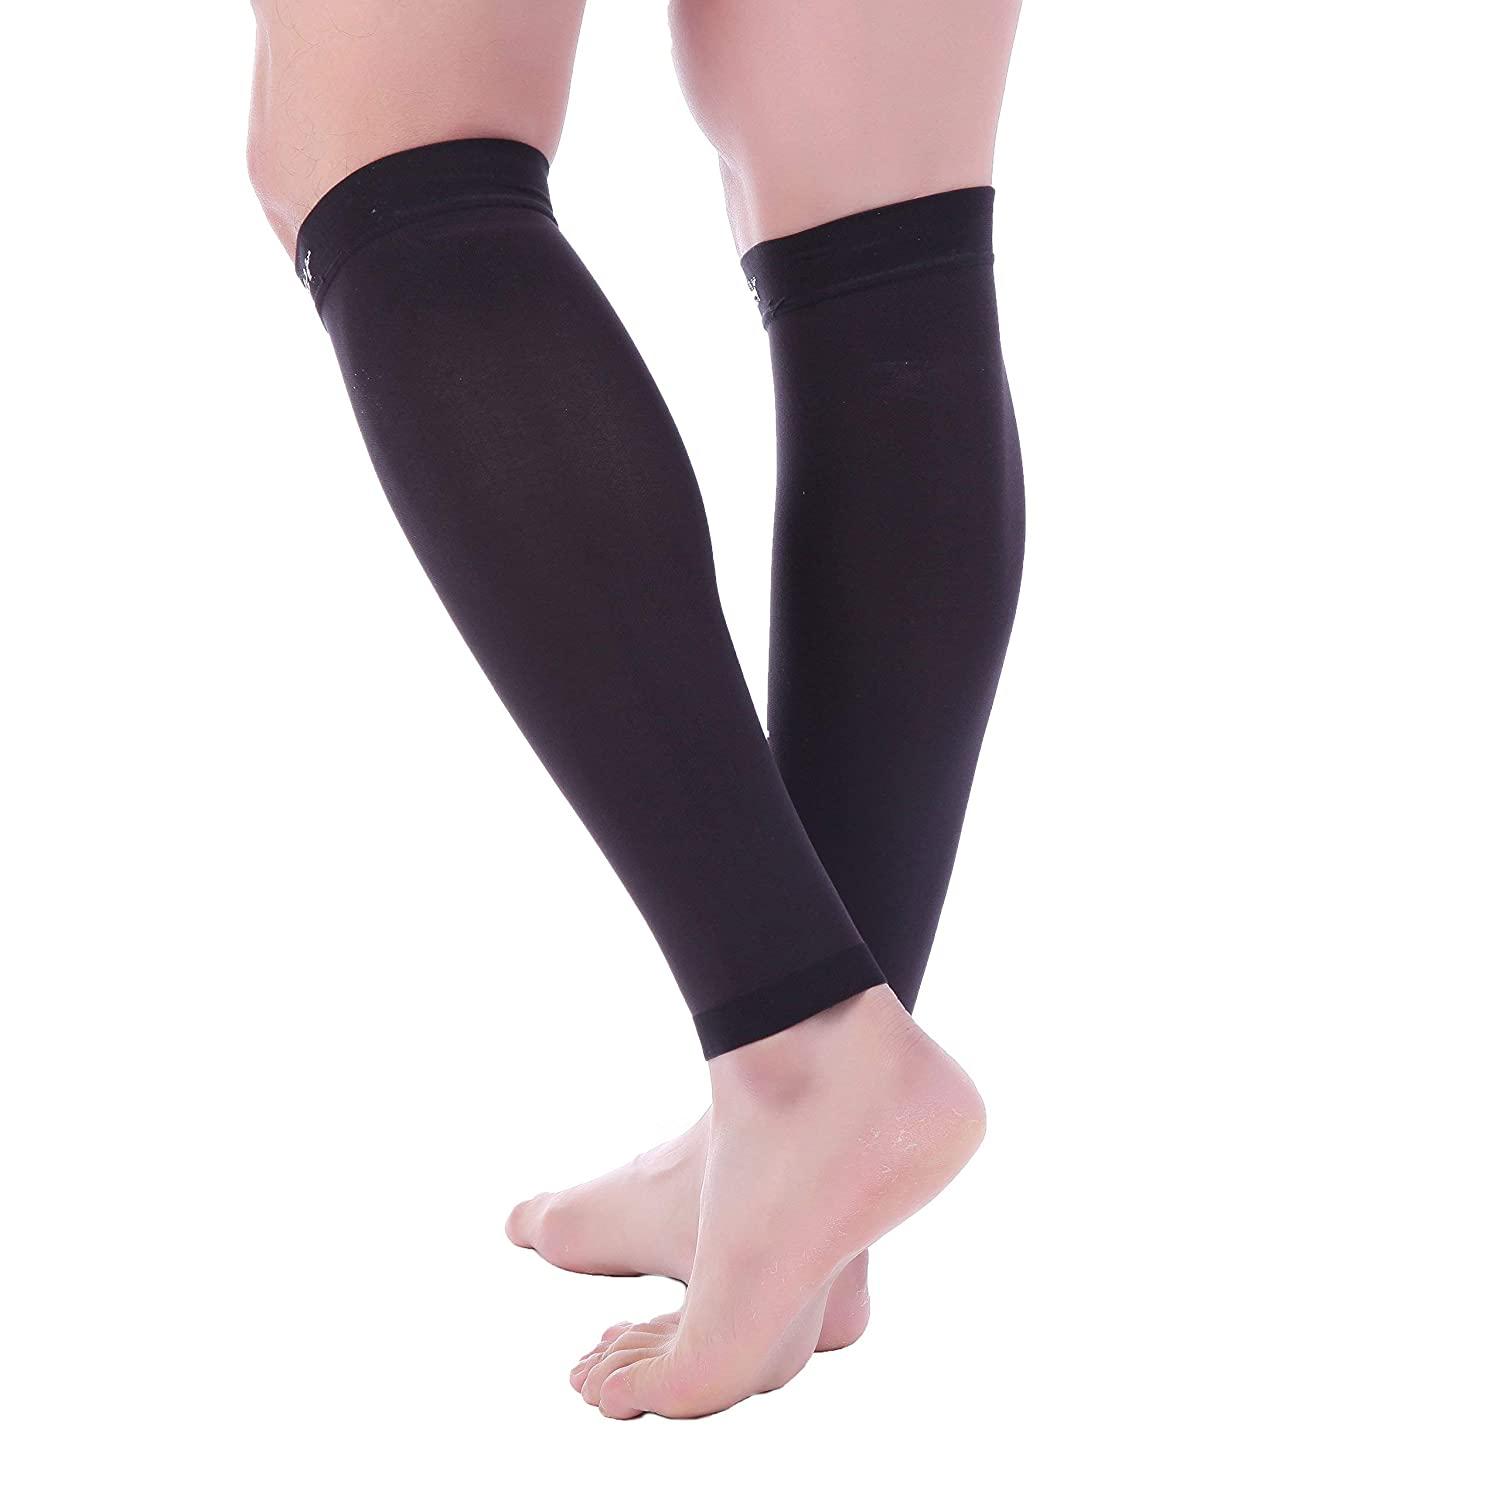 Doc Miller Open Toe Compression Socks, 15-20 mmHg, Toeless Compression  Socks Women and Men for Maternity, Improved Blood Circulation, Shin Splints  